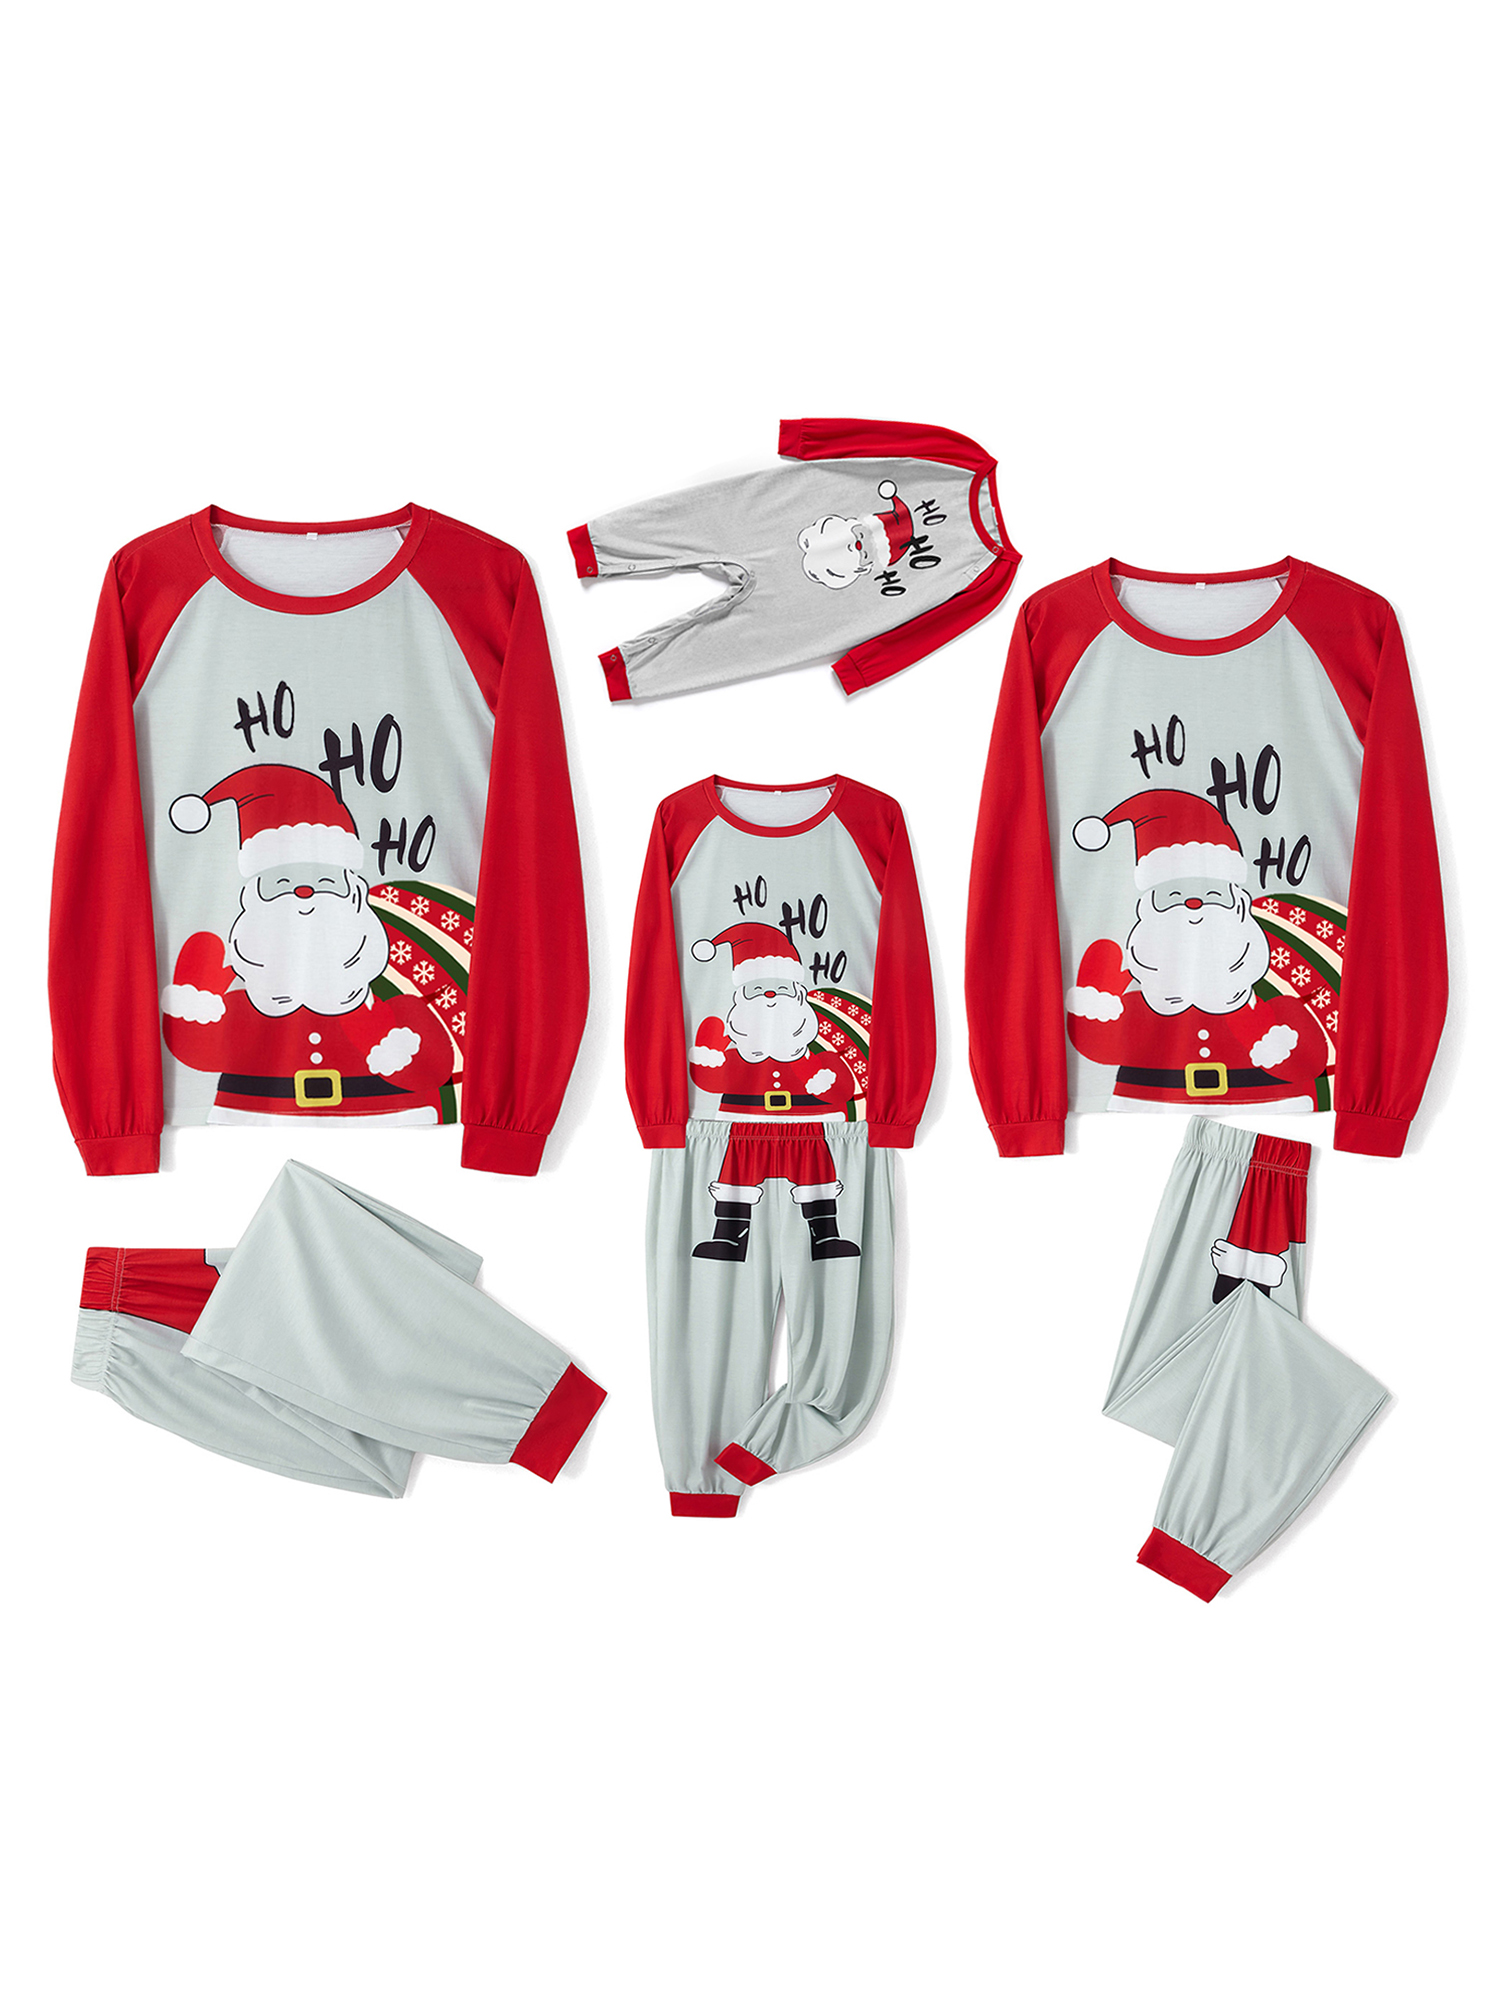 Youweixiong Matching Family Pajamas Sets Christmas PJ's Sleepwear Santa Claus Print op with Bottom Pants - image 1 of 7